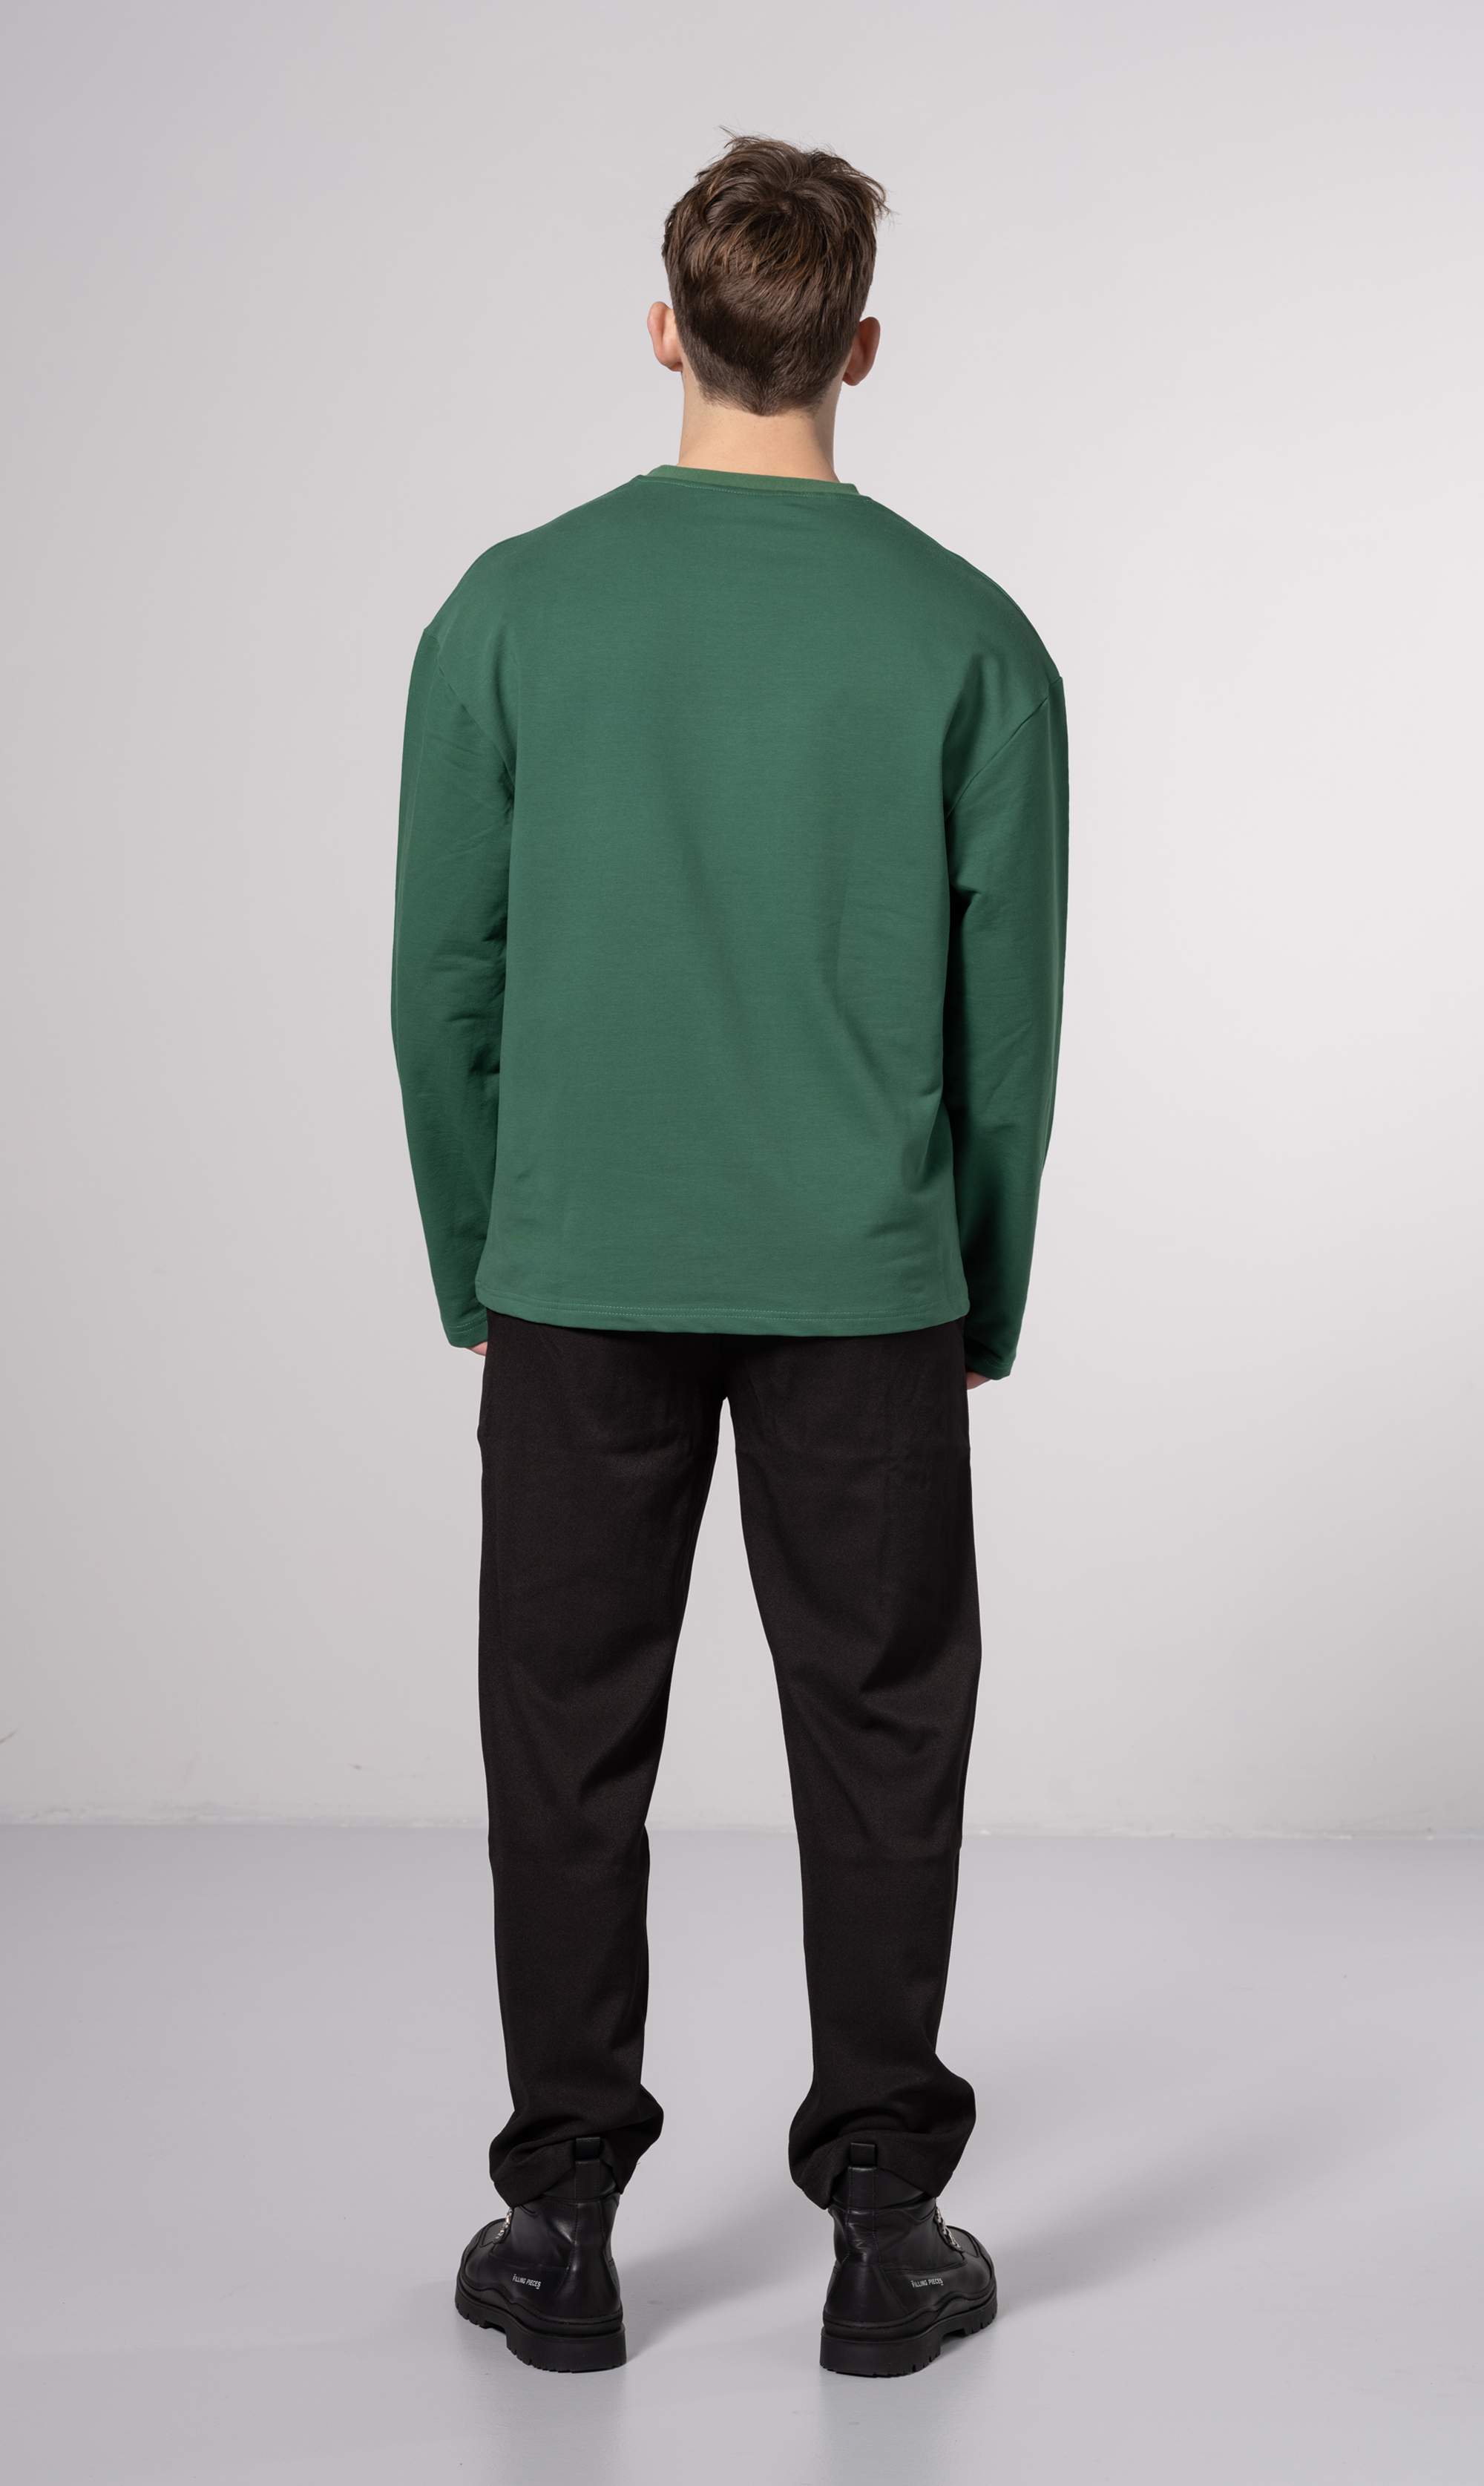 'Not an ugly christmas sweater' Green Longsleeve